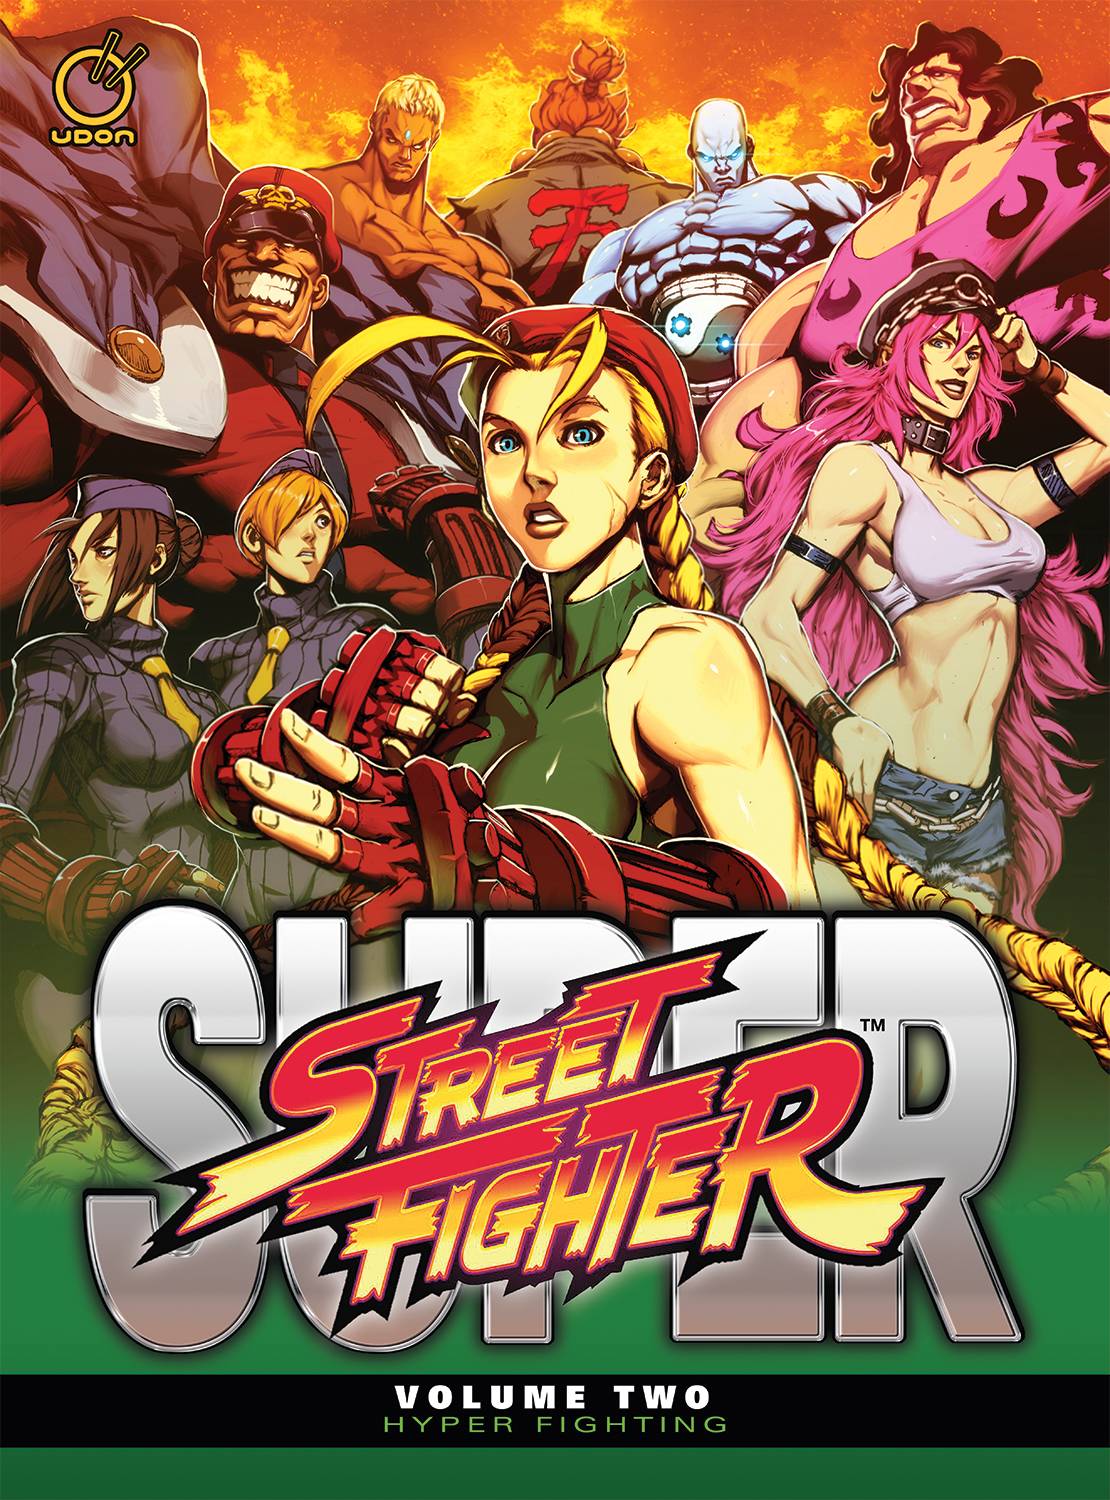 Super Street Fighter Vol. 2 Hyper Fighting Hardcover 